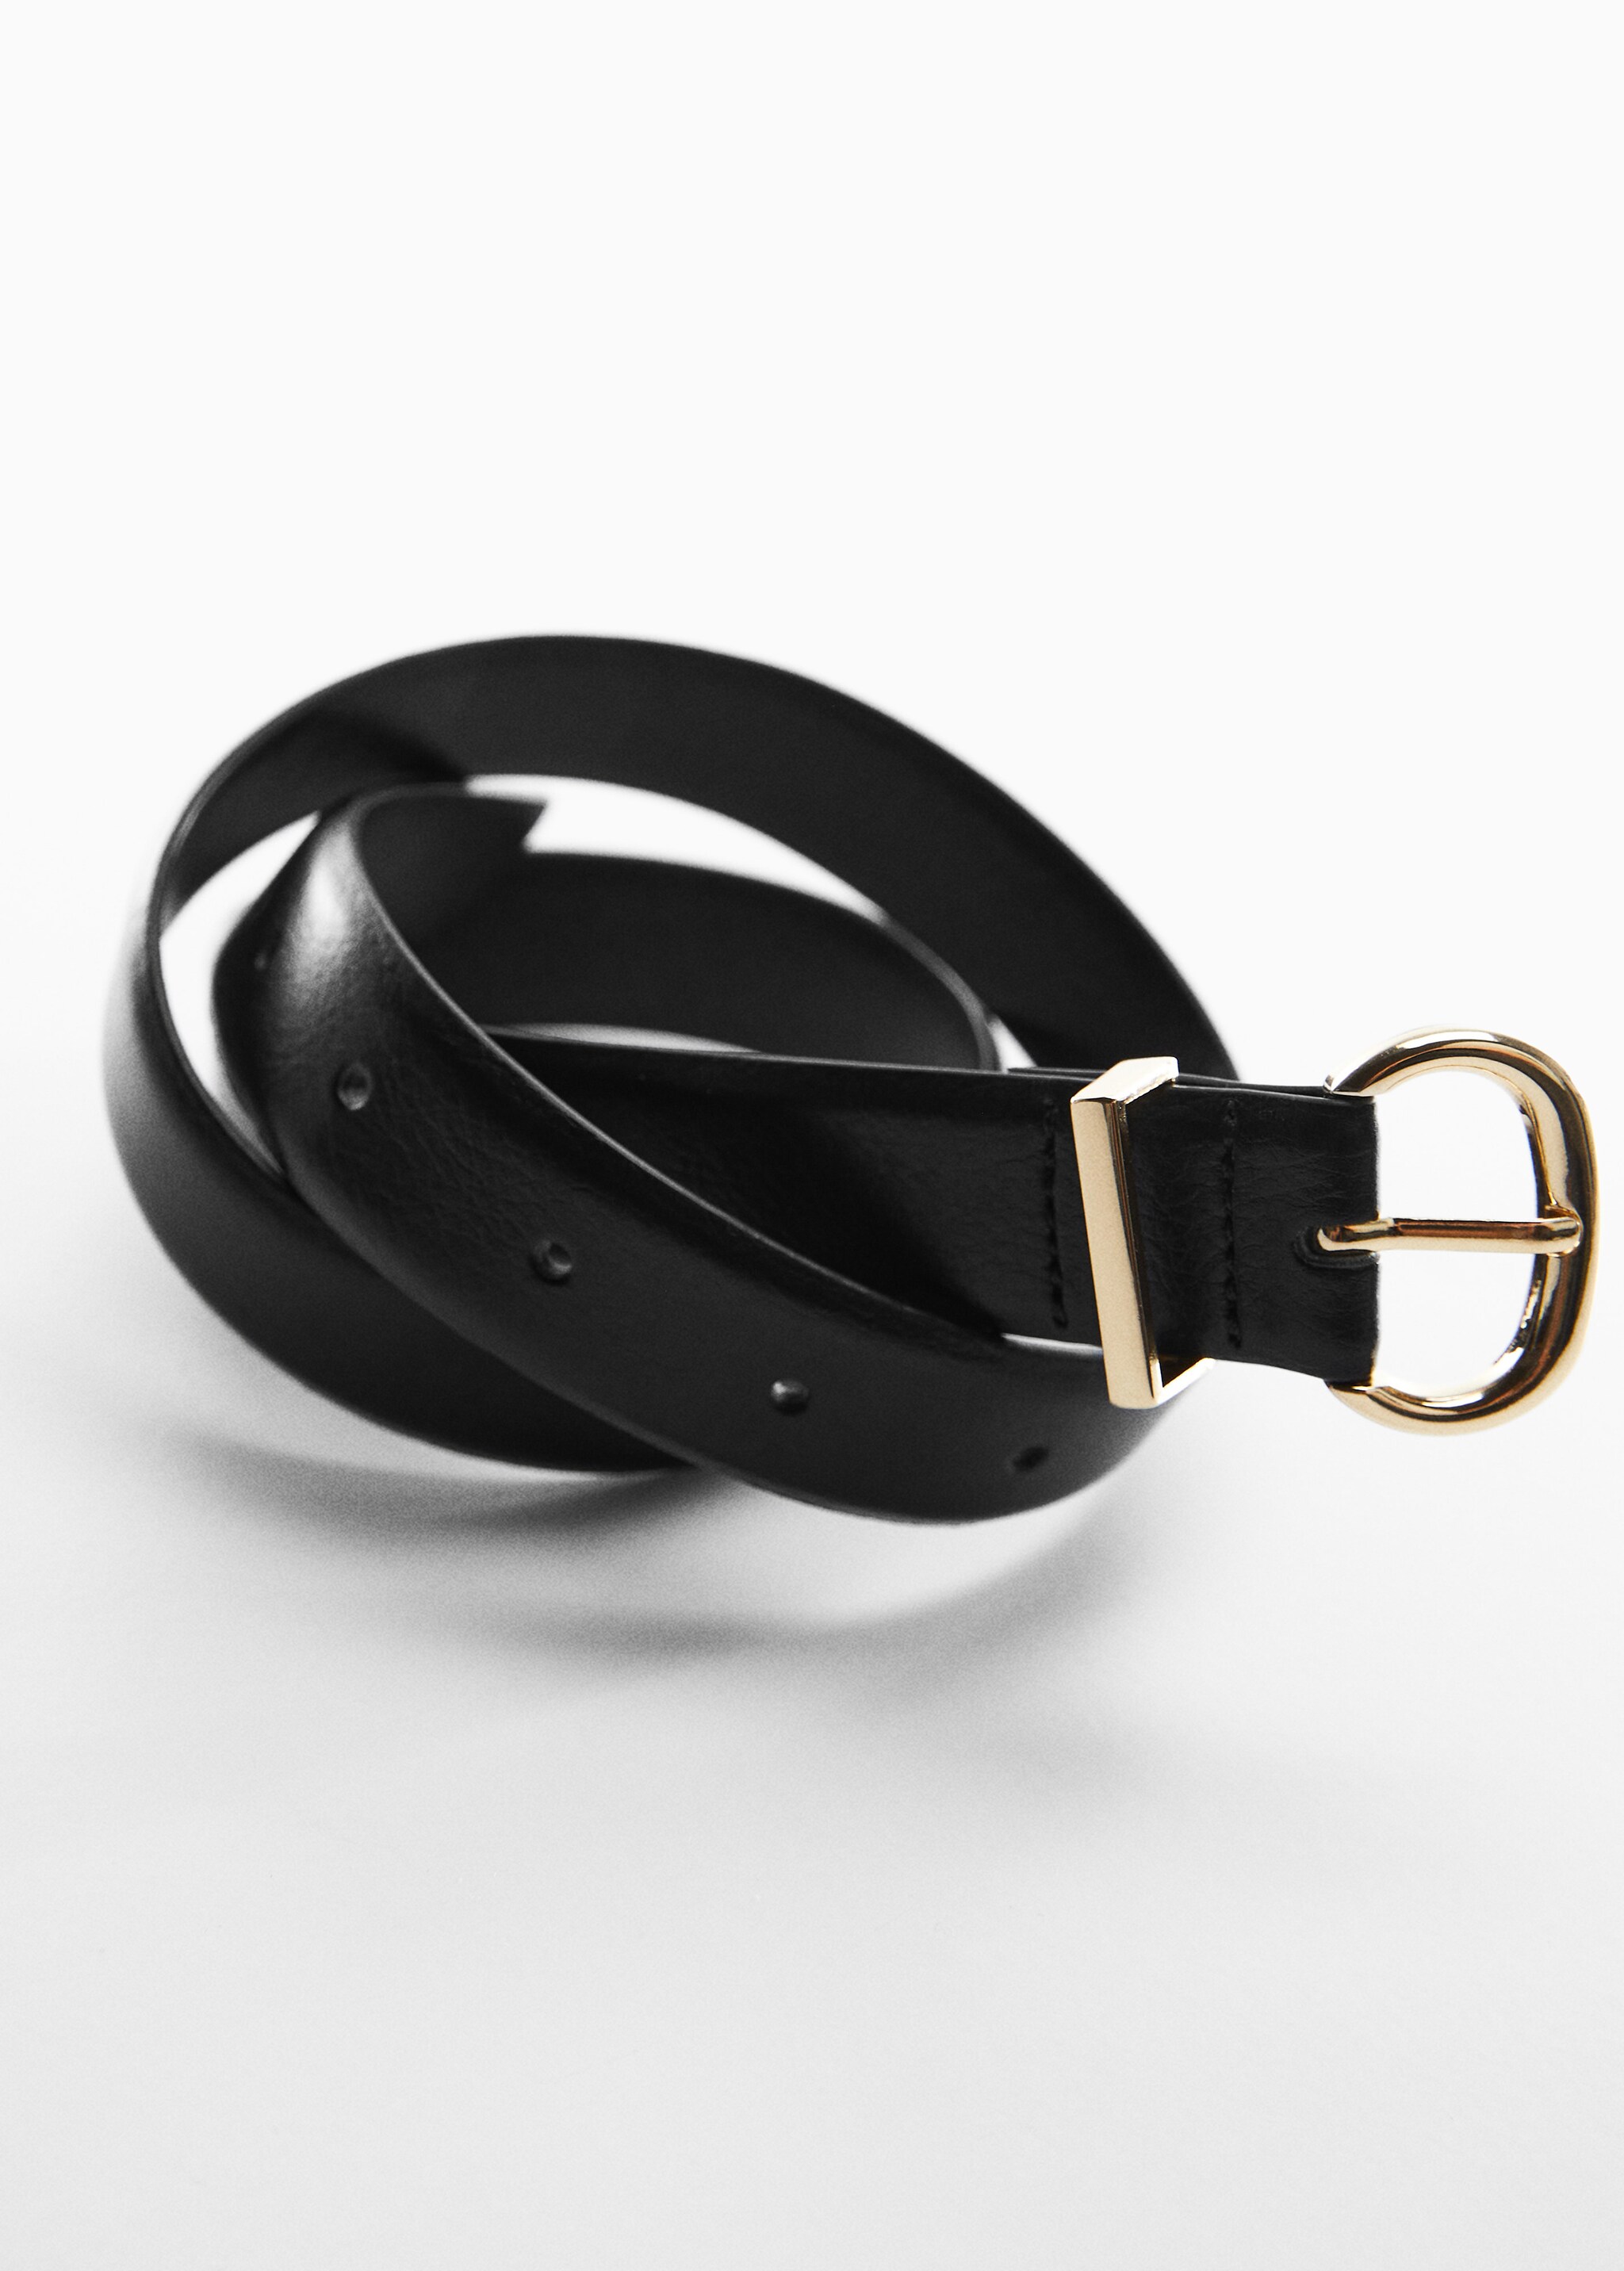 Metal buckle belt - Details of the article 5